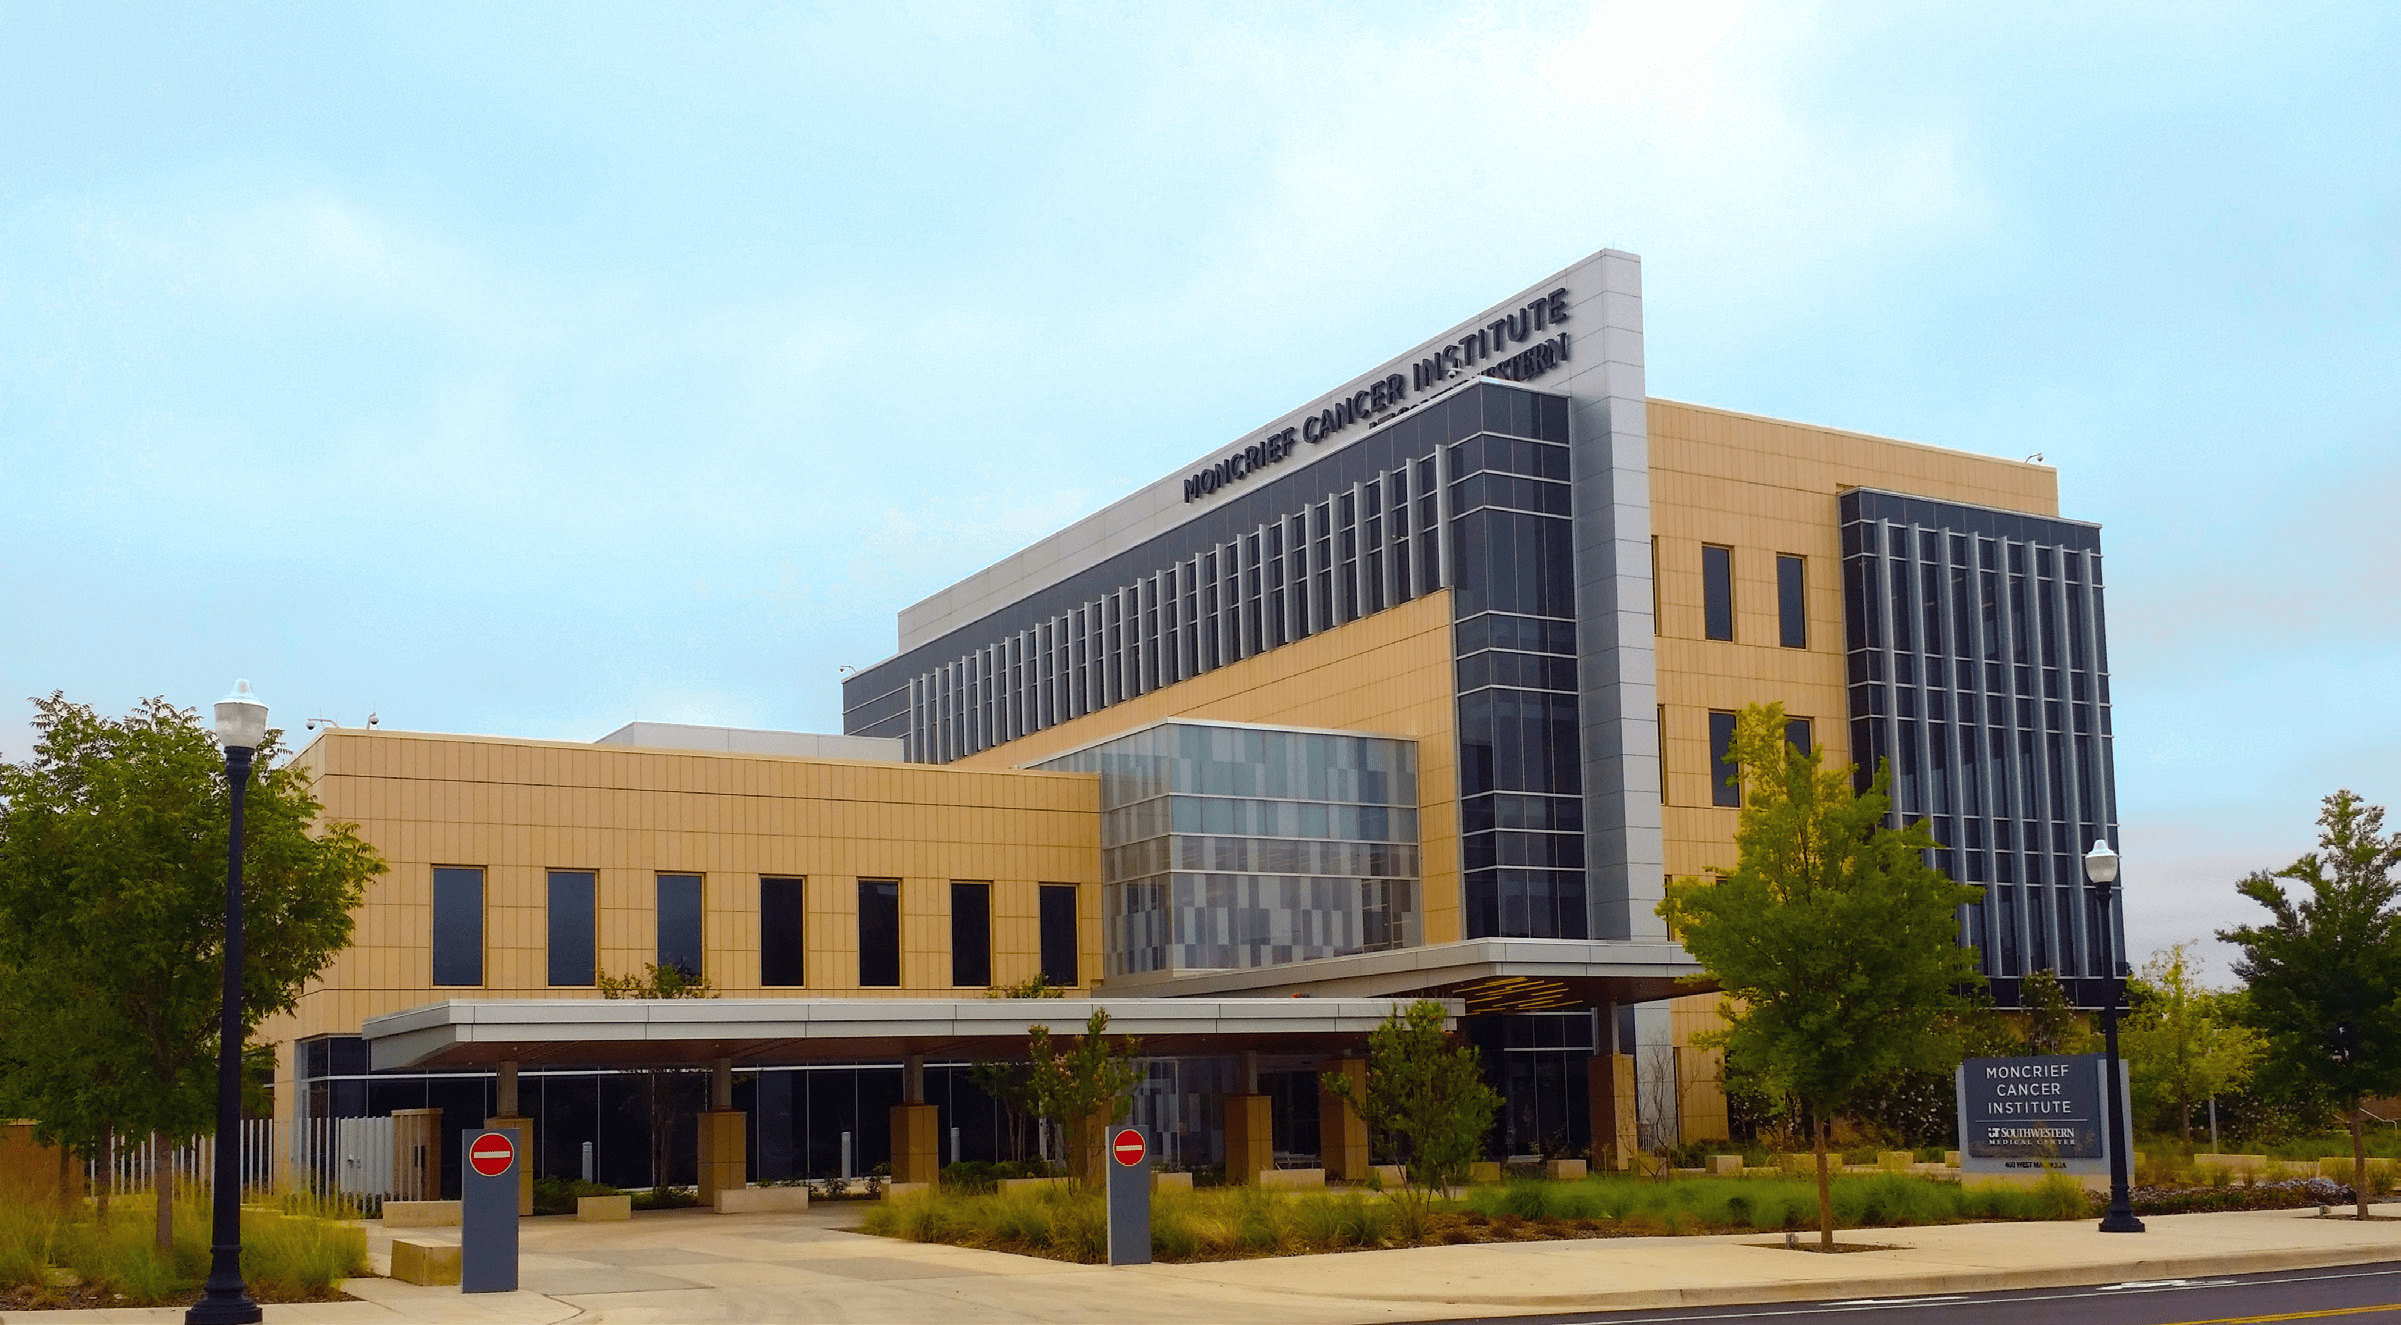 Moncrief Cancer Institute - Fort Worth, TX